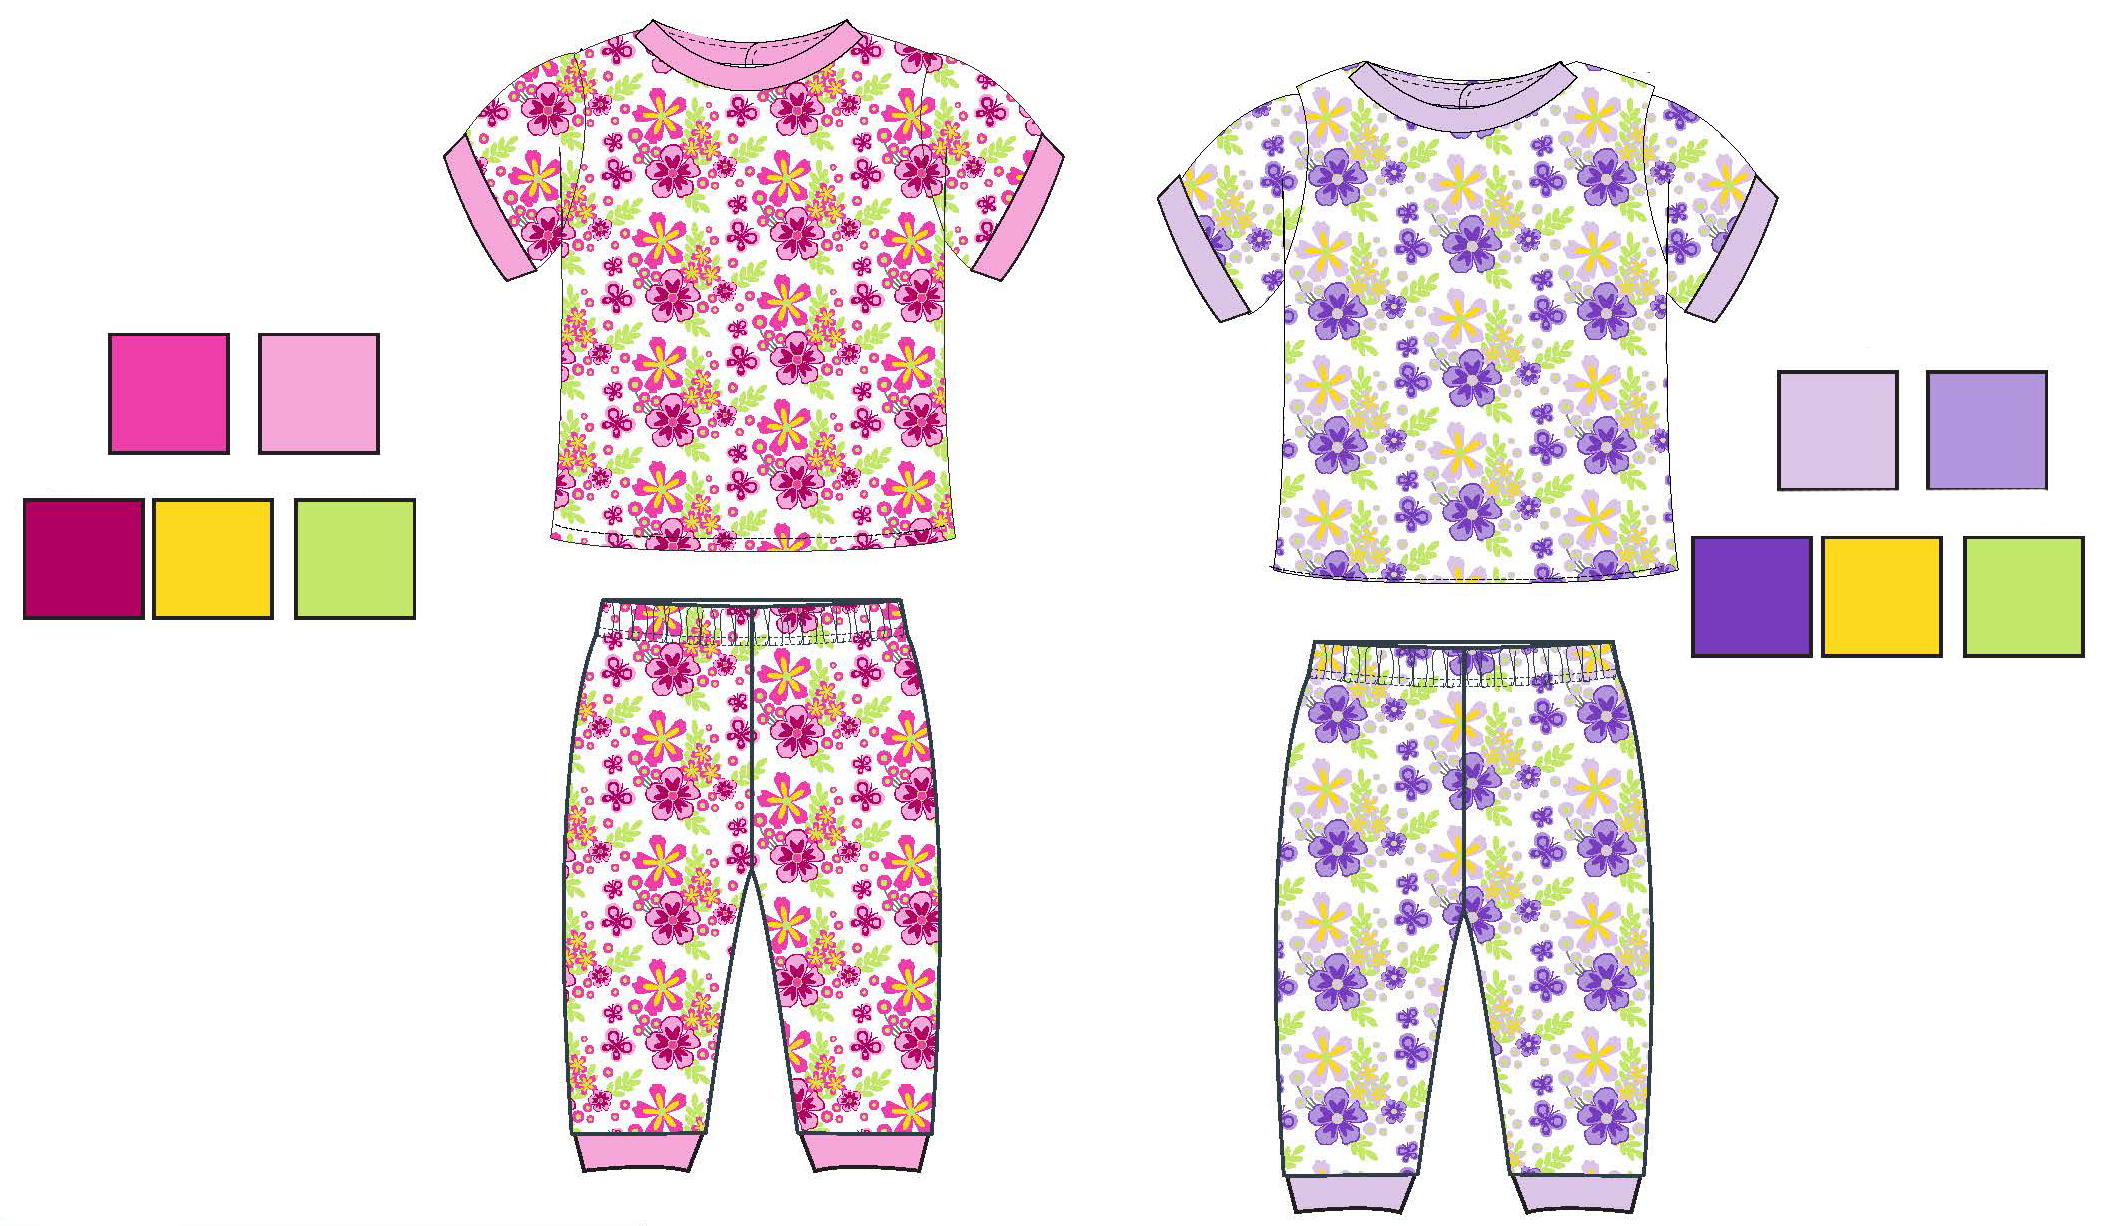 Toddler Girl's 2 PC. Short-Sleeve Rib PAJAMAS Sets w/ Floral Print - Sizes 12M-24M